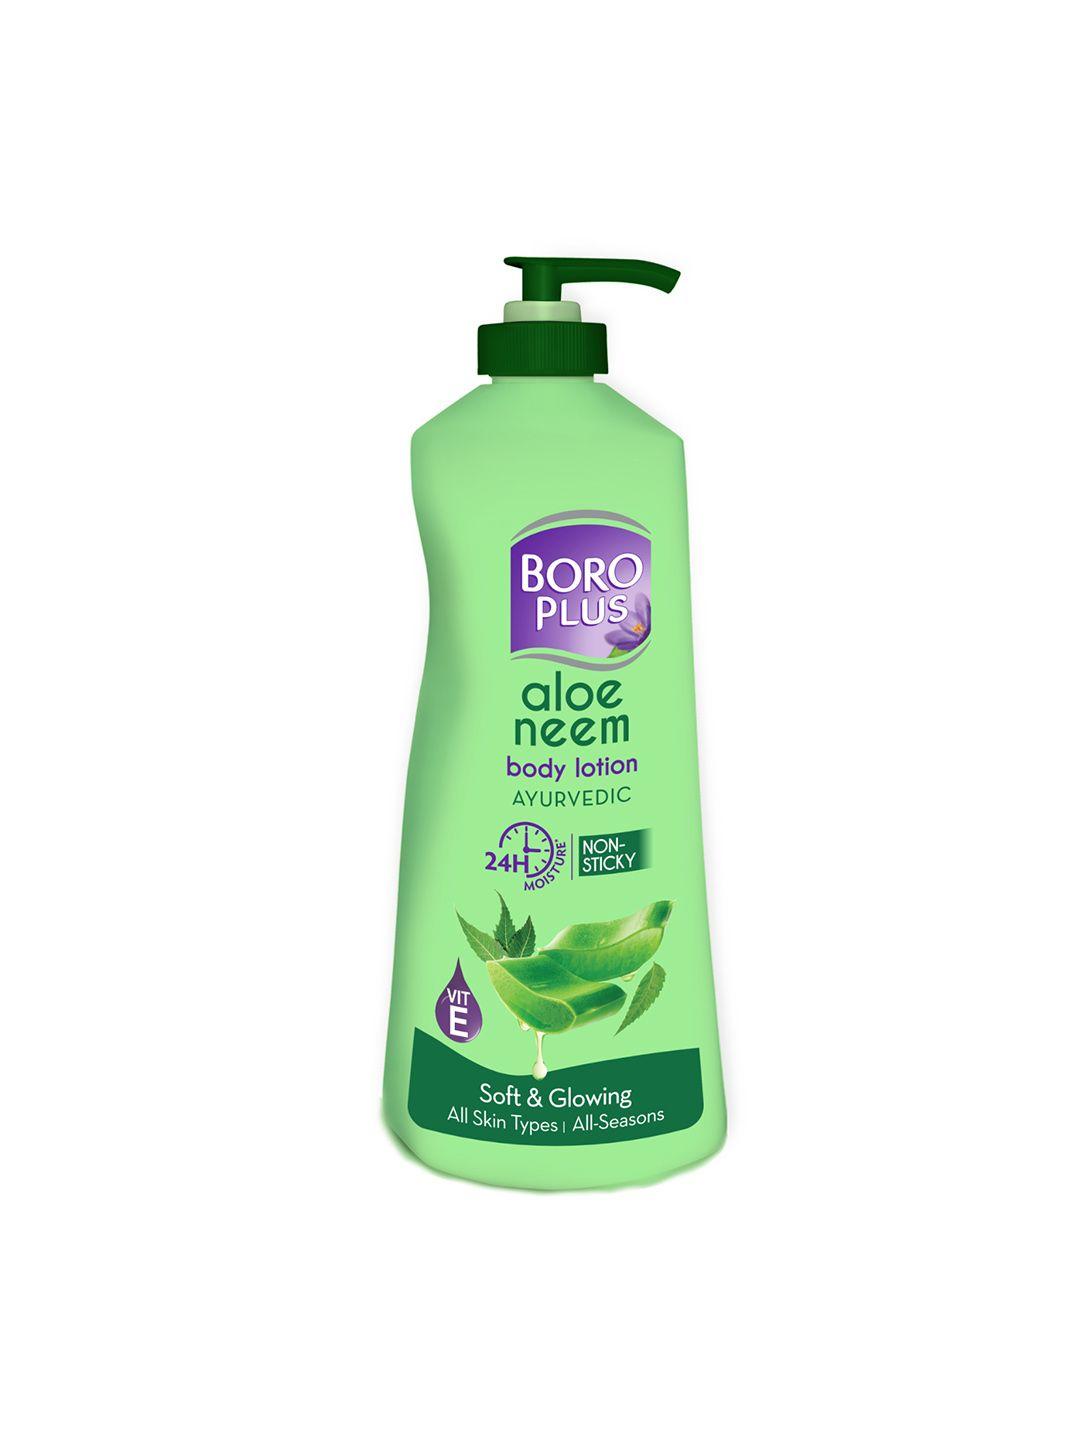 boroplus-aloe-neem-body-lotion-with-vitamin-e-for-soft-&-glowing-skin---400ml